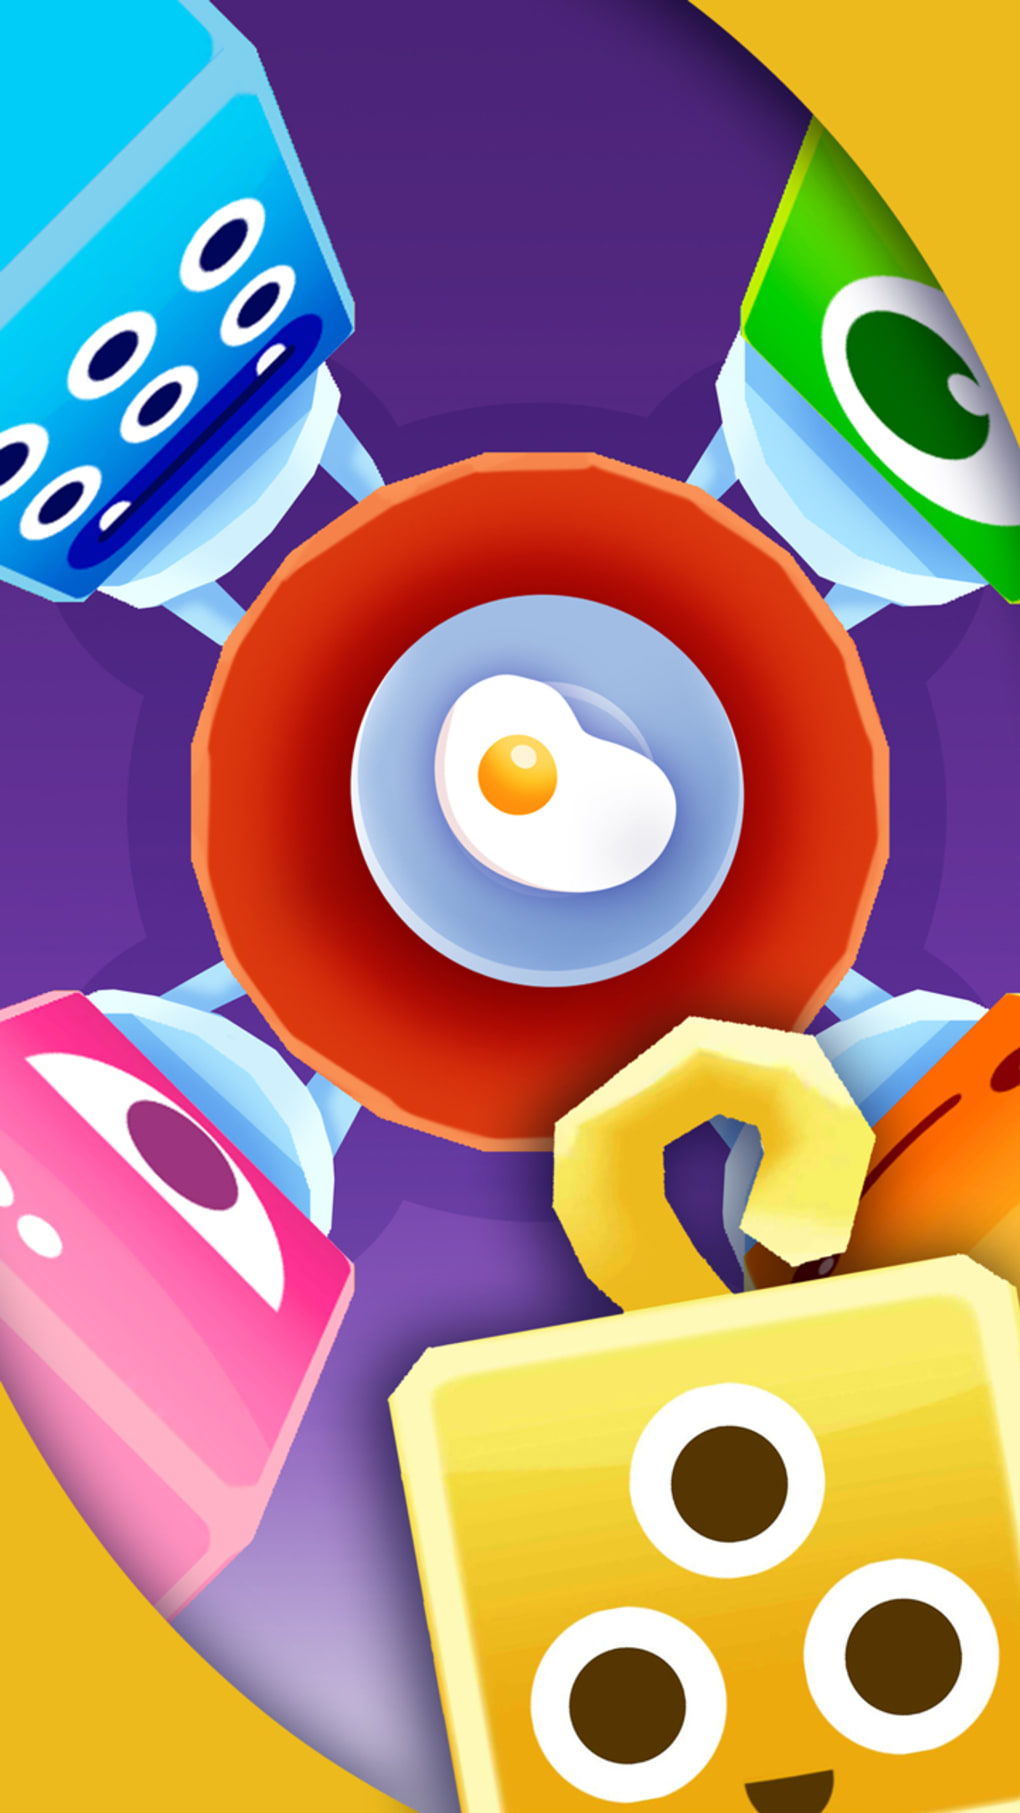 Party Games: Jogo de Quatro – Apps no Google Play